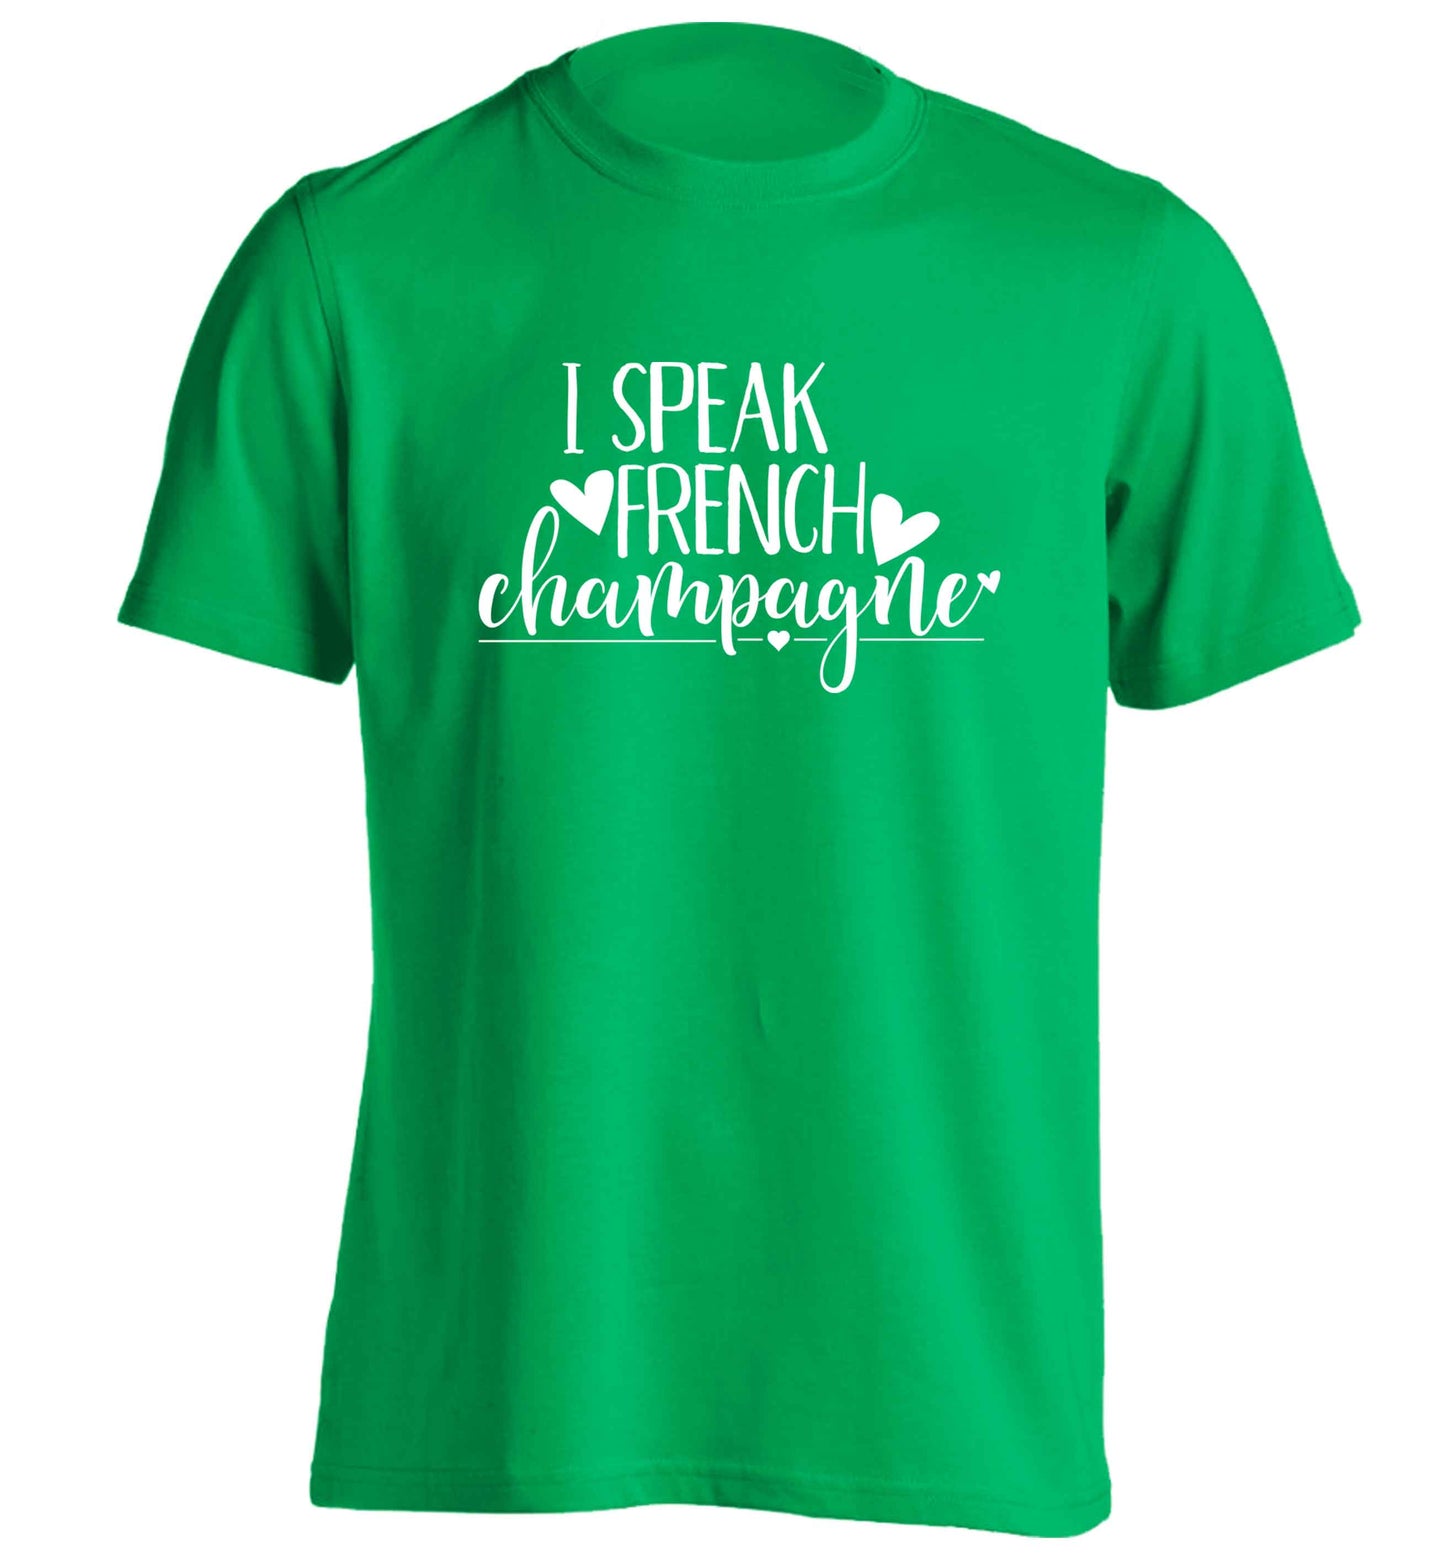 I speak french champagne adults unisex green Tshirt 2XL